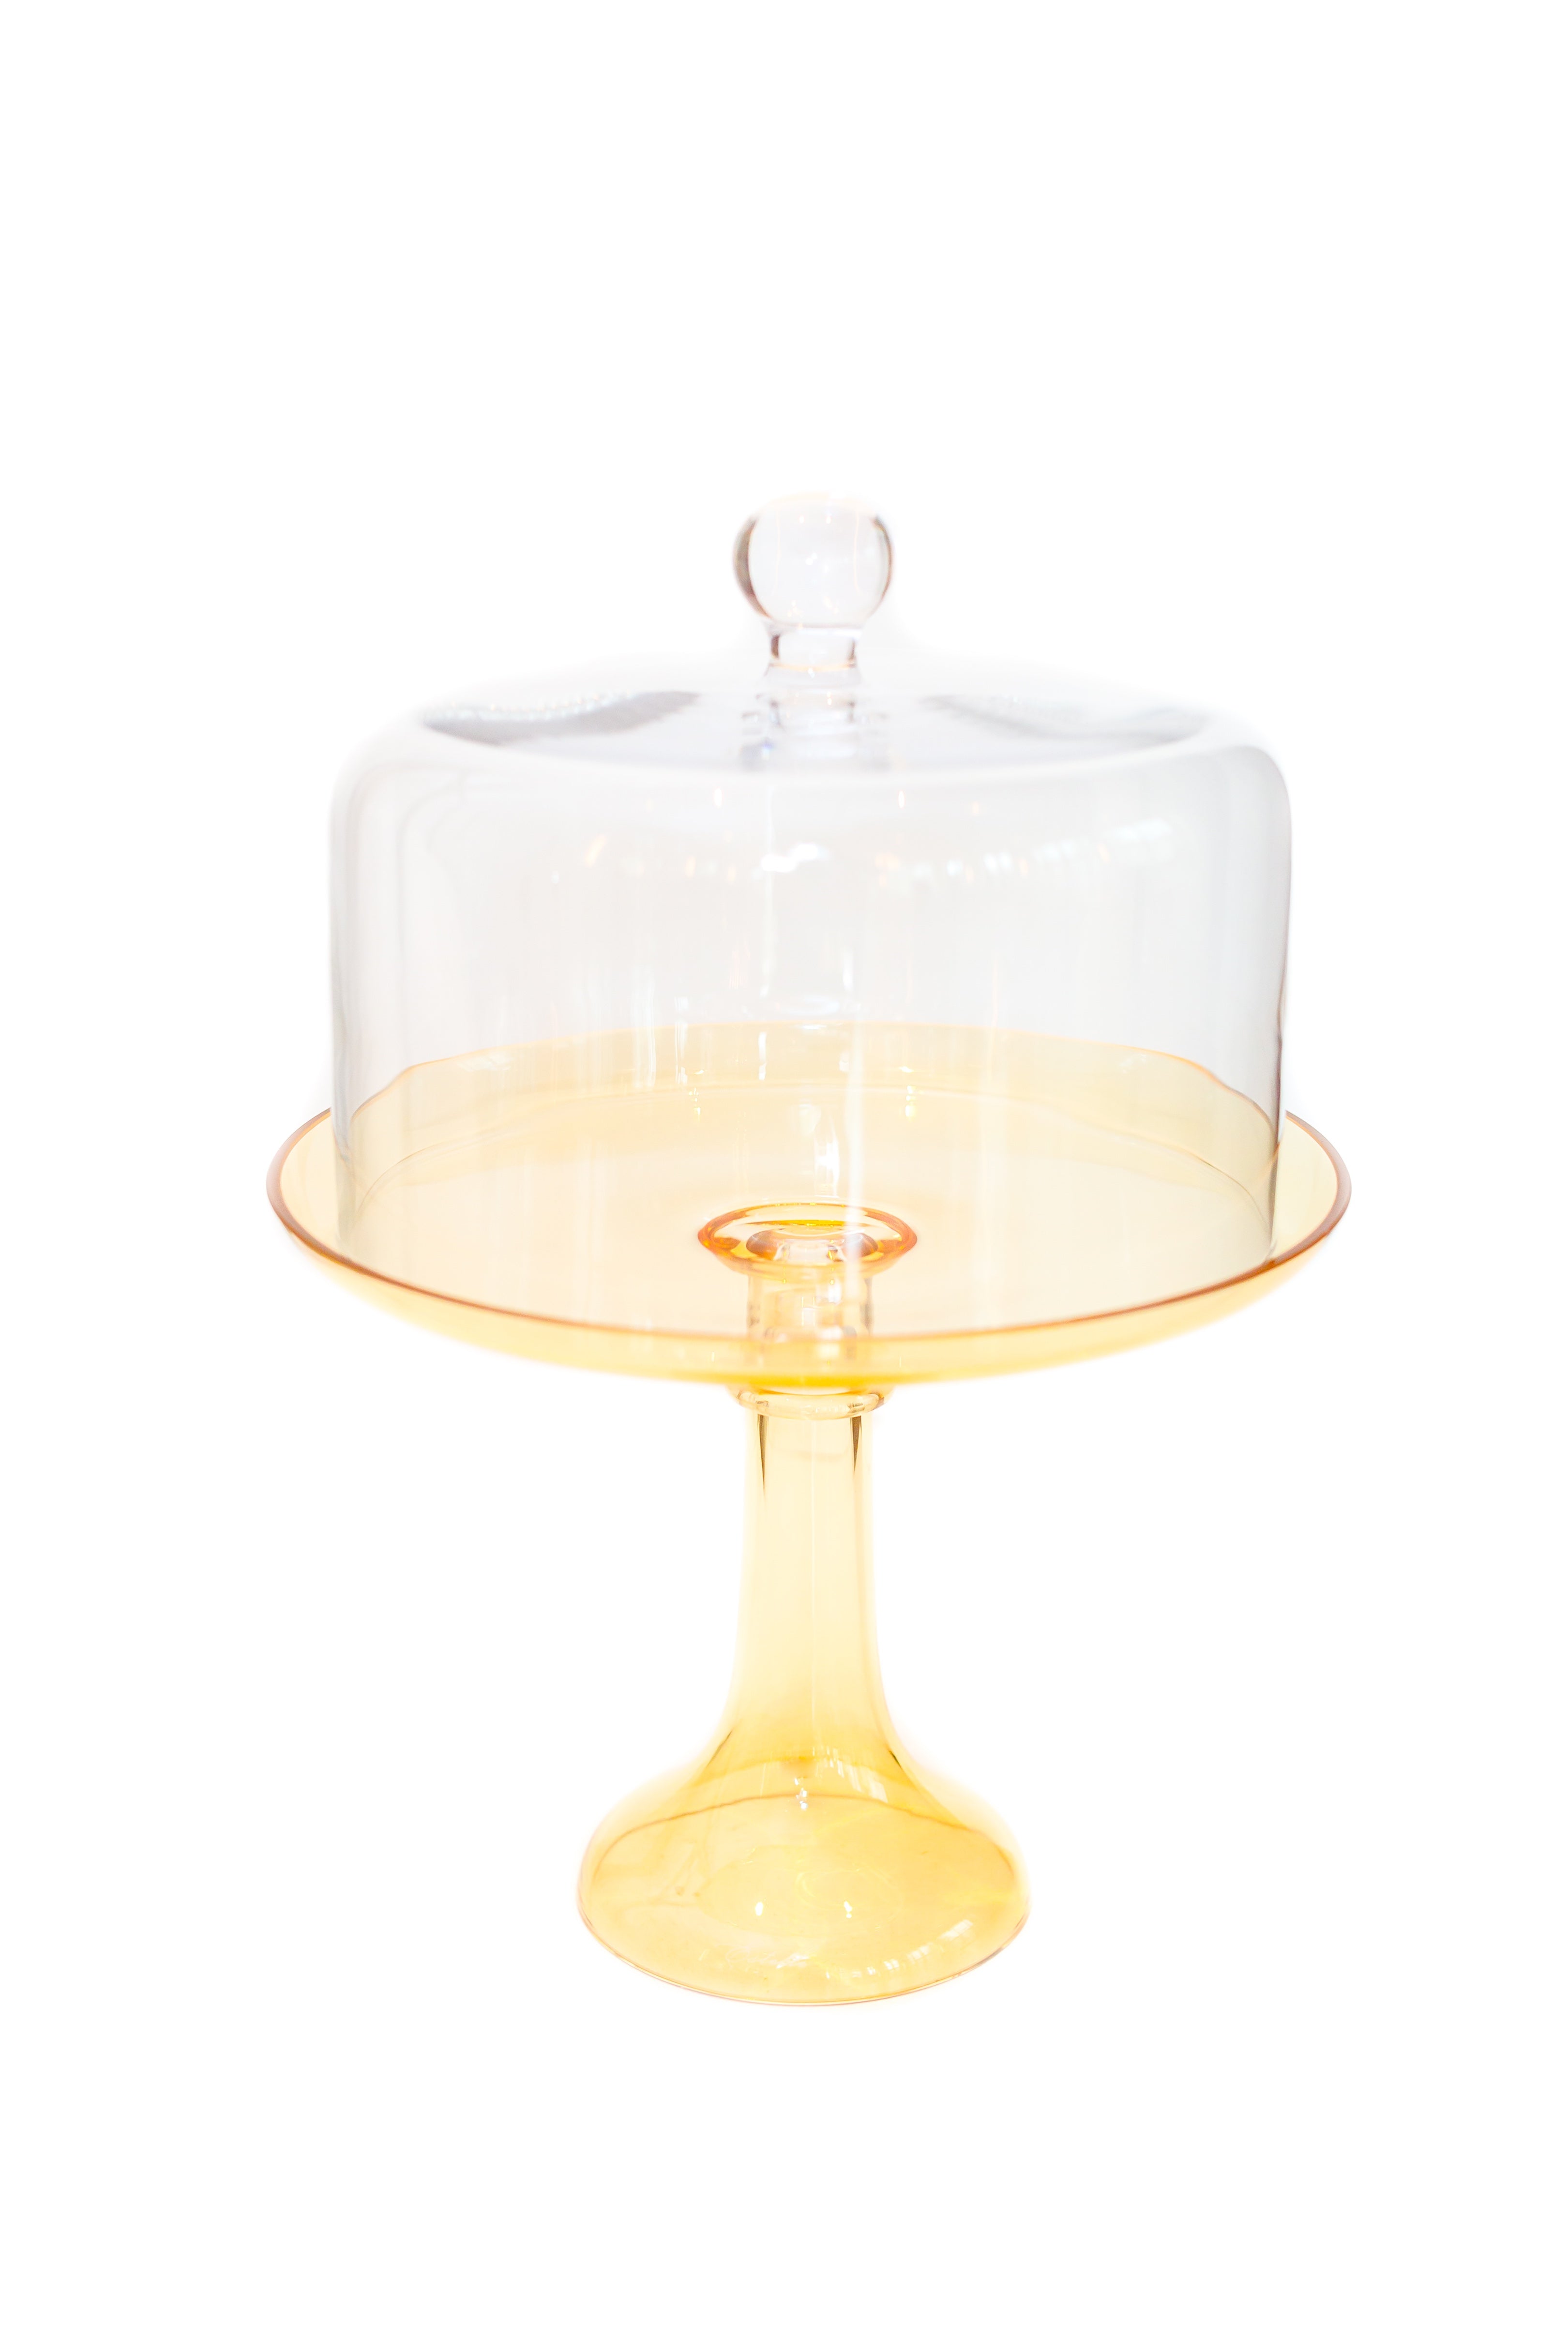 Karaca Rory Glass Cake Dome with Stand, 19cm, Transparent - KARACA UK